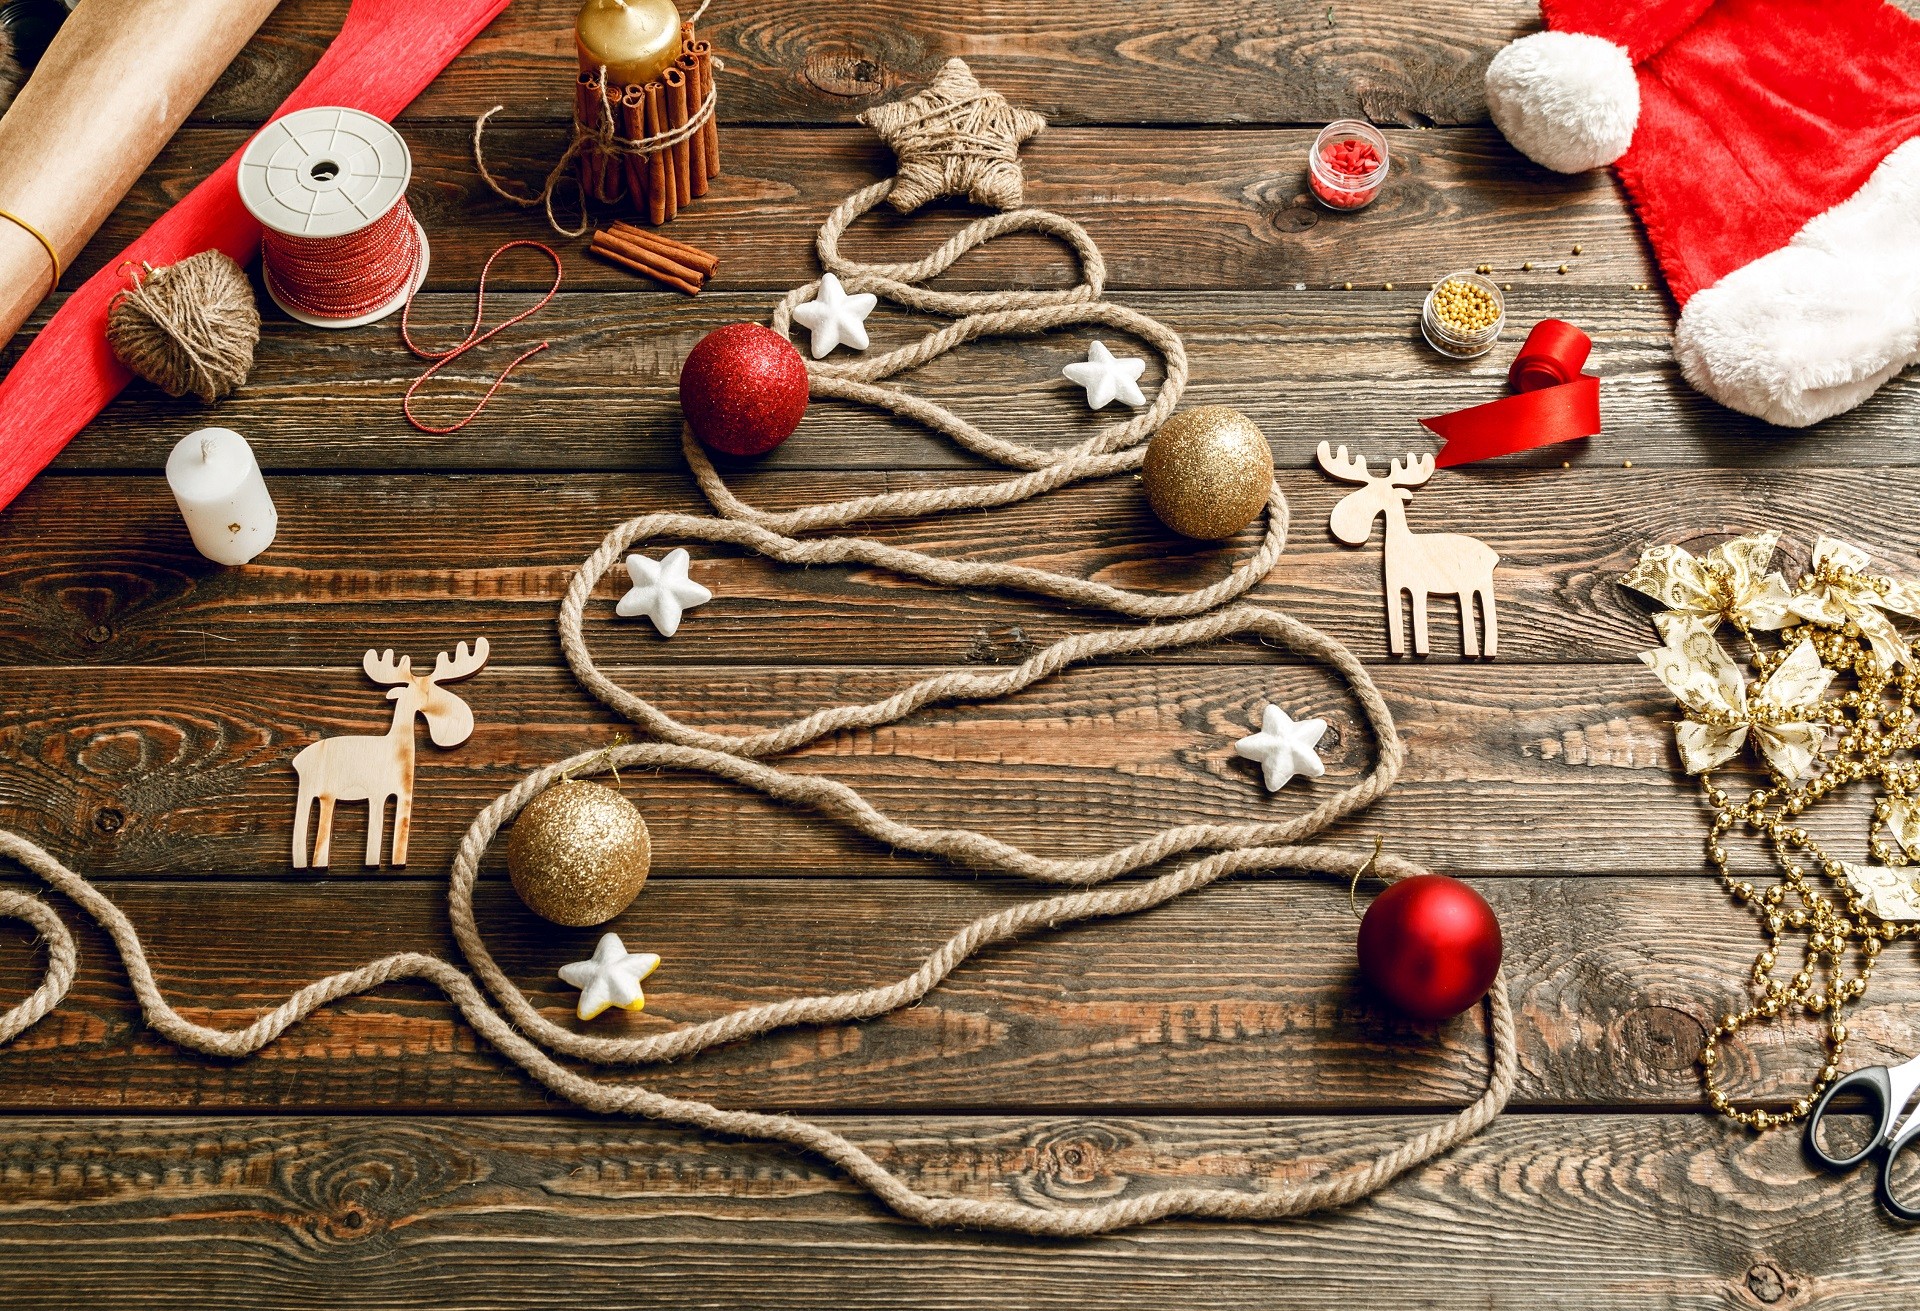 5 Creative Ways to Save on Christmas Tree Decorations